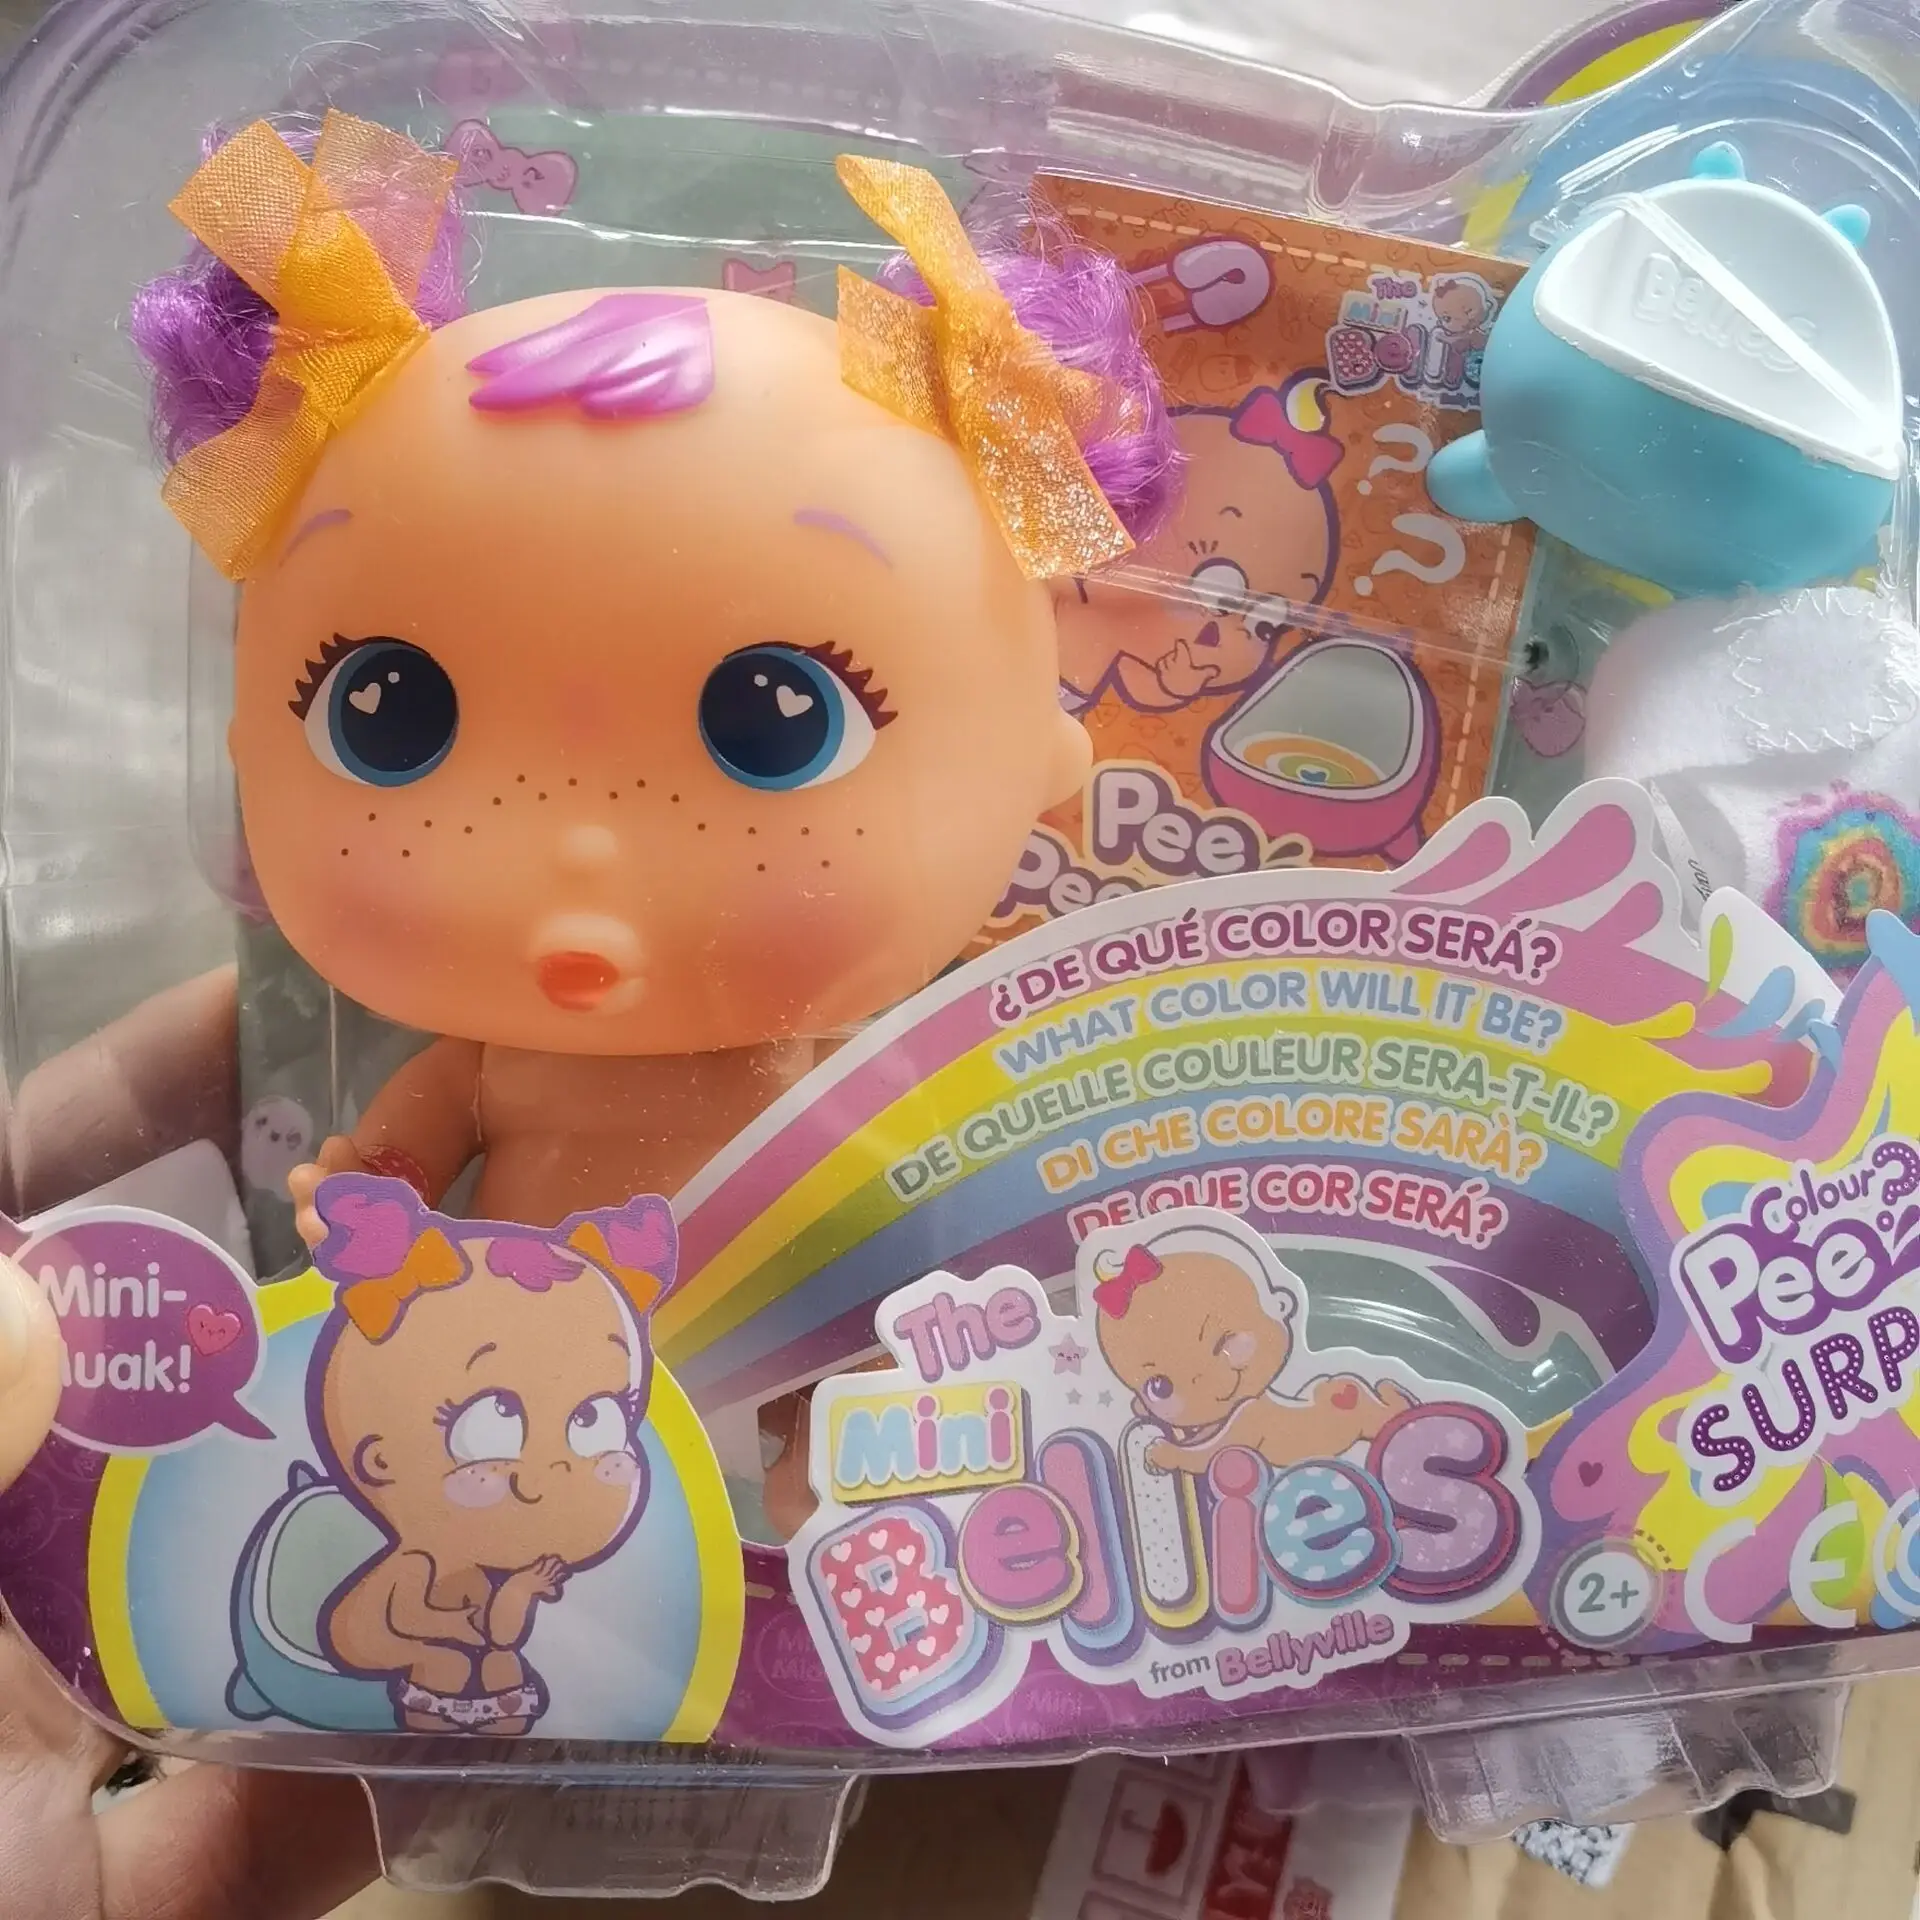 my mini baby born - Buy Other international dolls on todocoleccion